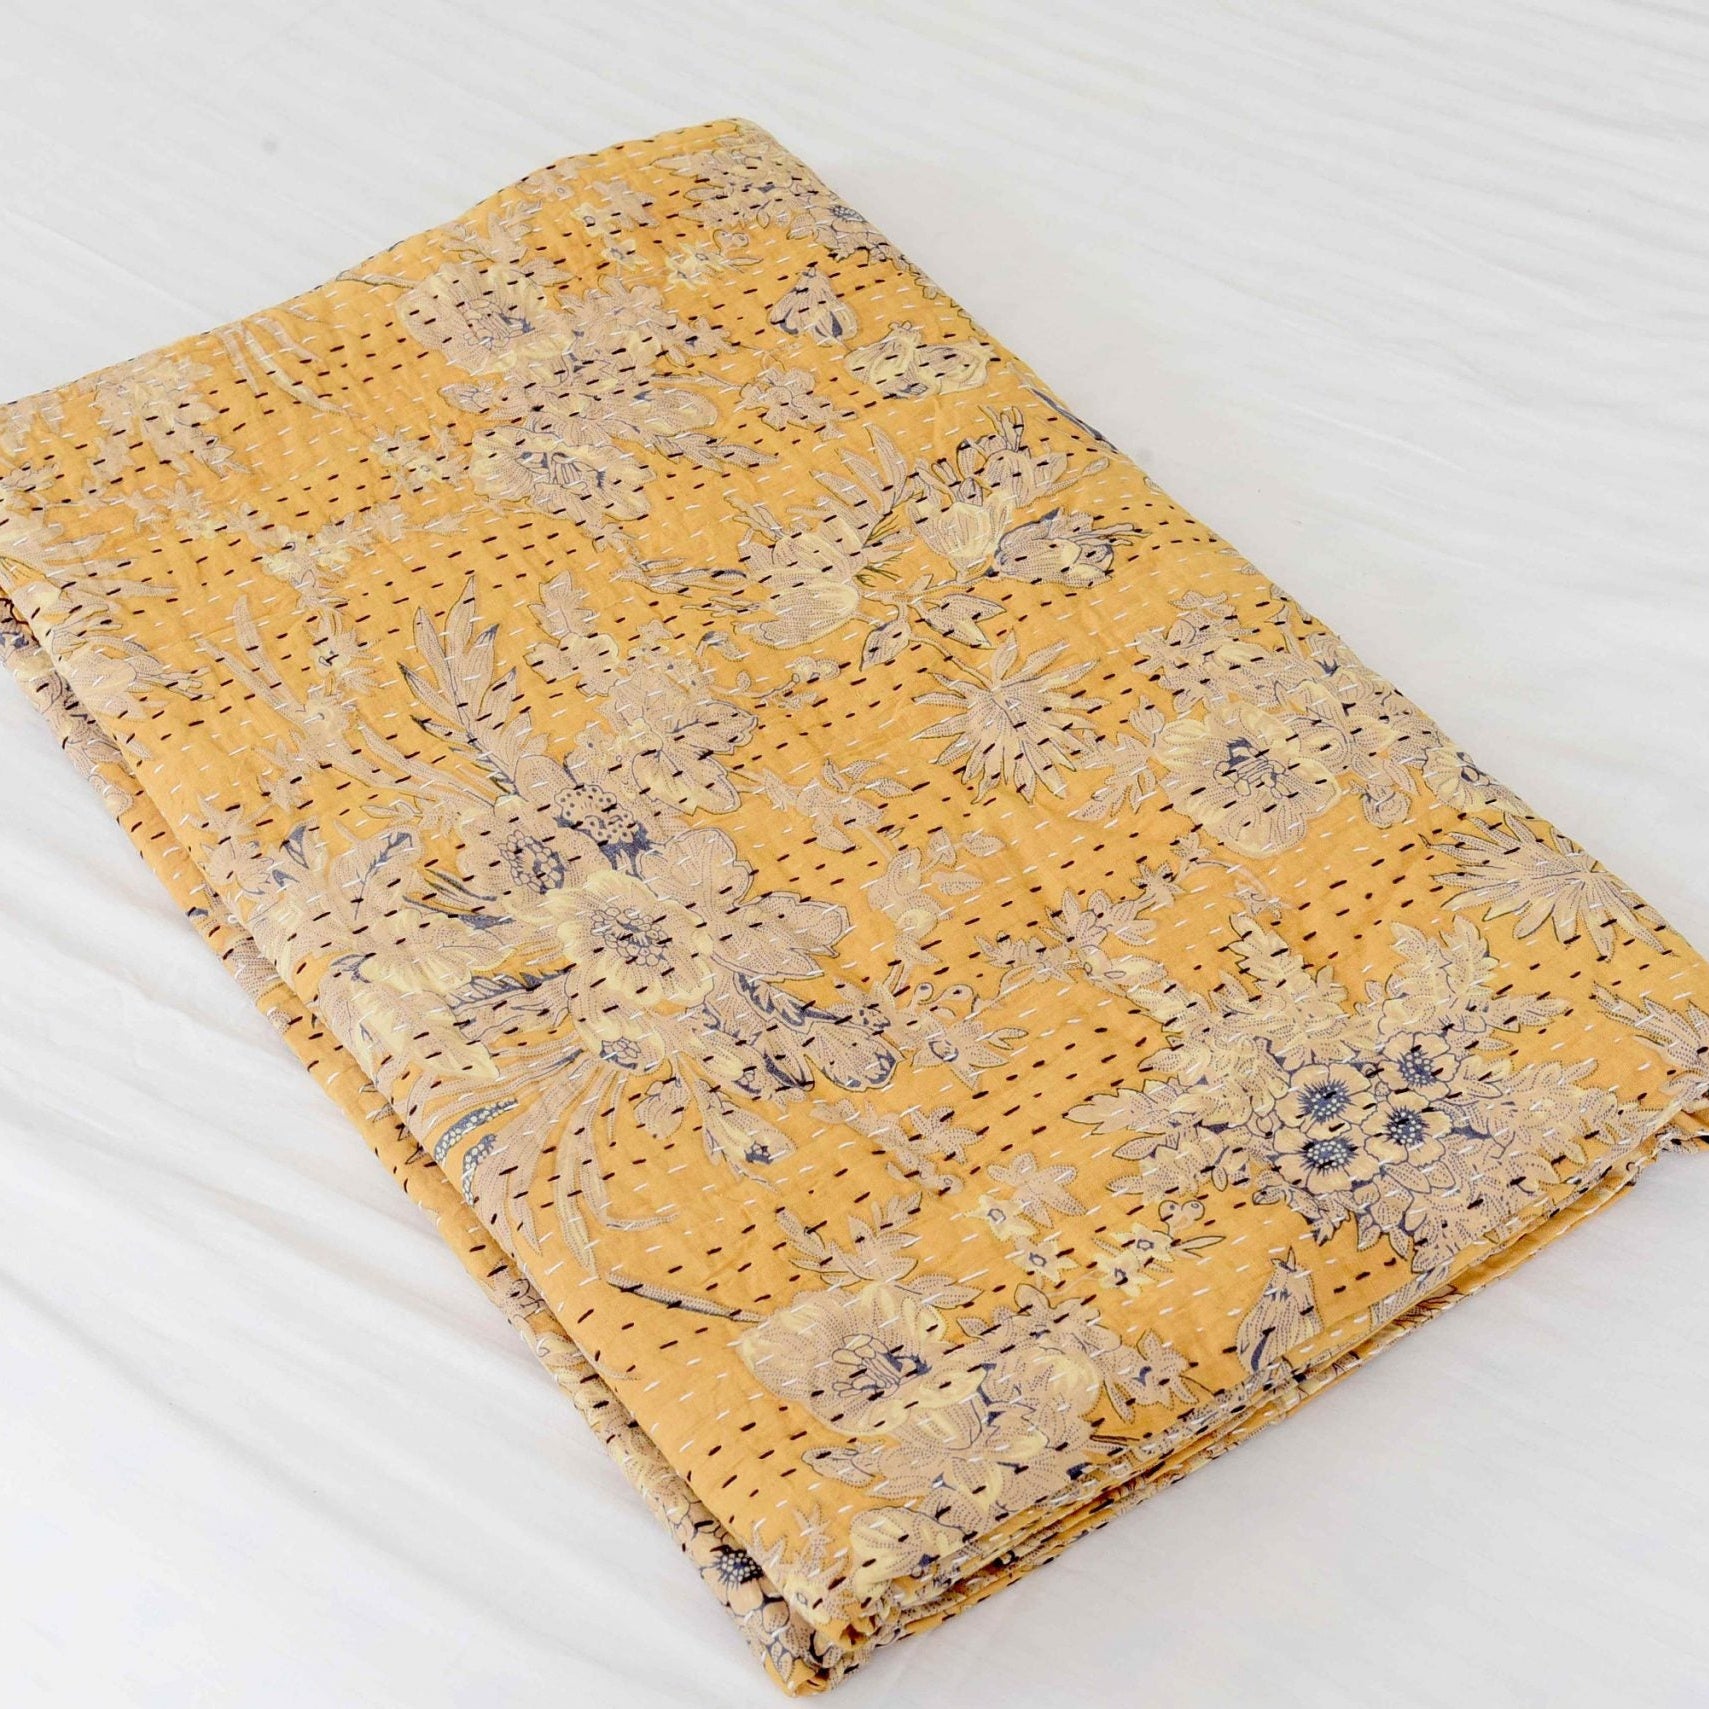 Linen Connections Kantha Quilt Indian Quilt Block Print Quilt Bedspread Bohemian Boho Cotton Throw Quilt Handmade Baby Blanket